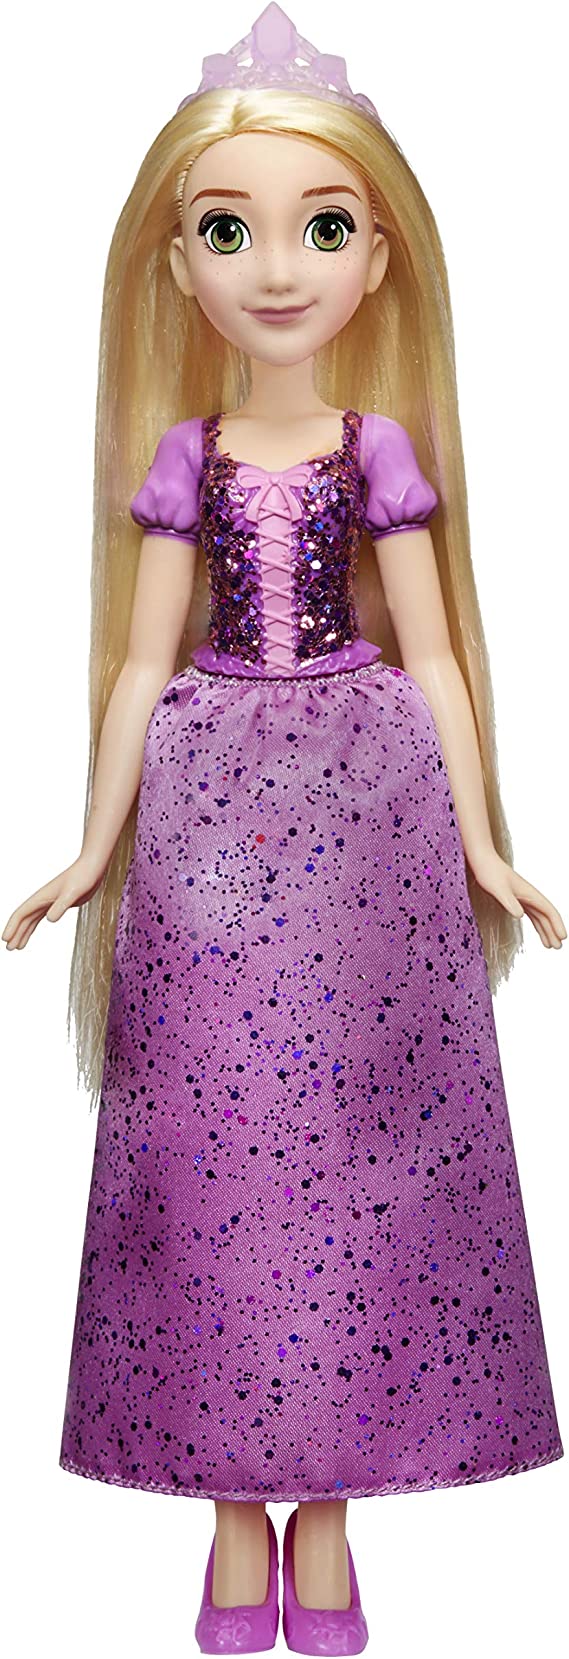 Disney Princess Royal Shimmer Rapunzel - E4157 - Planet Junior